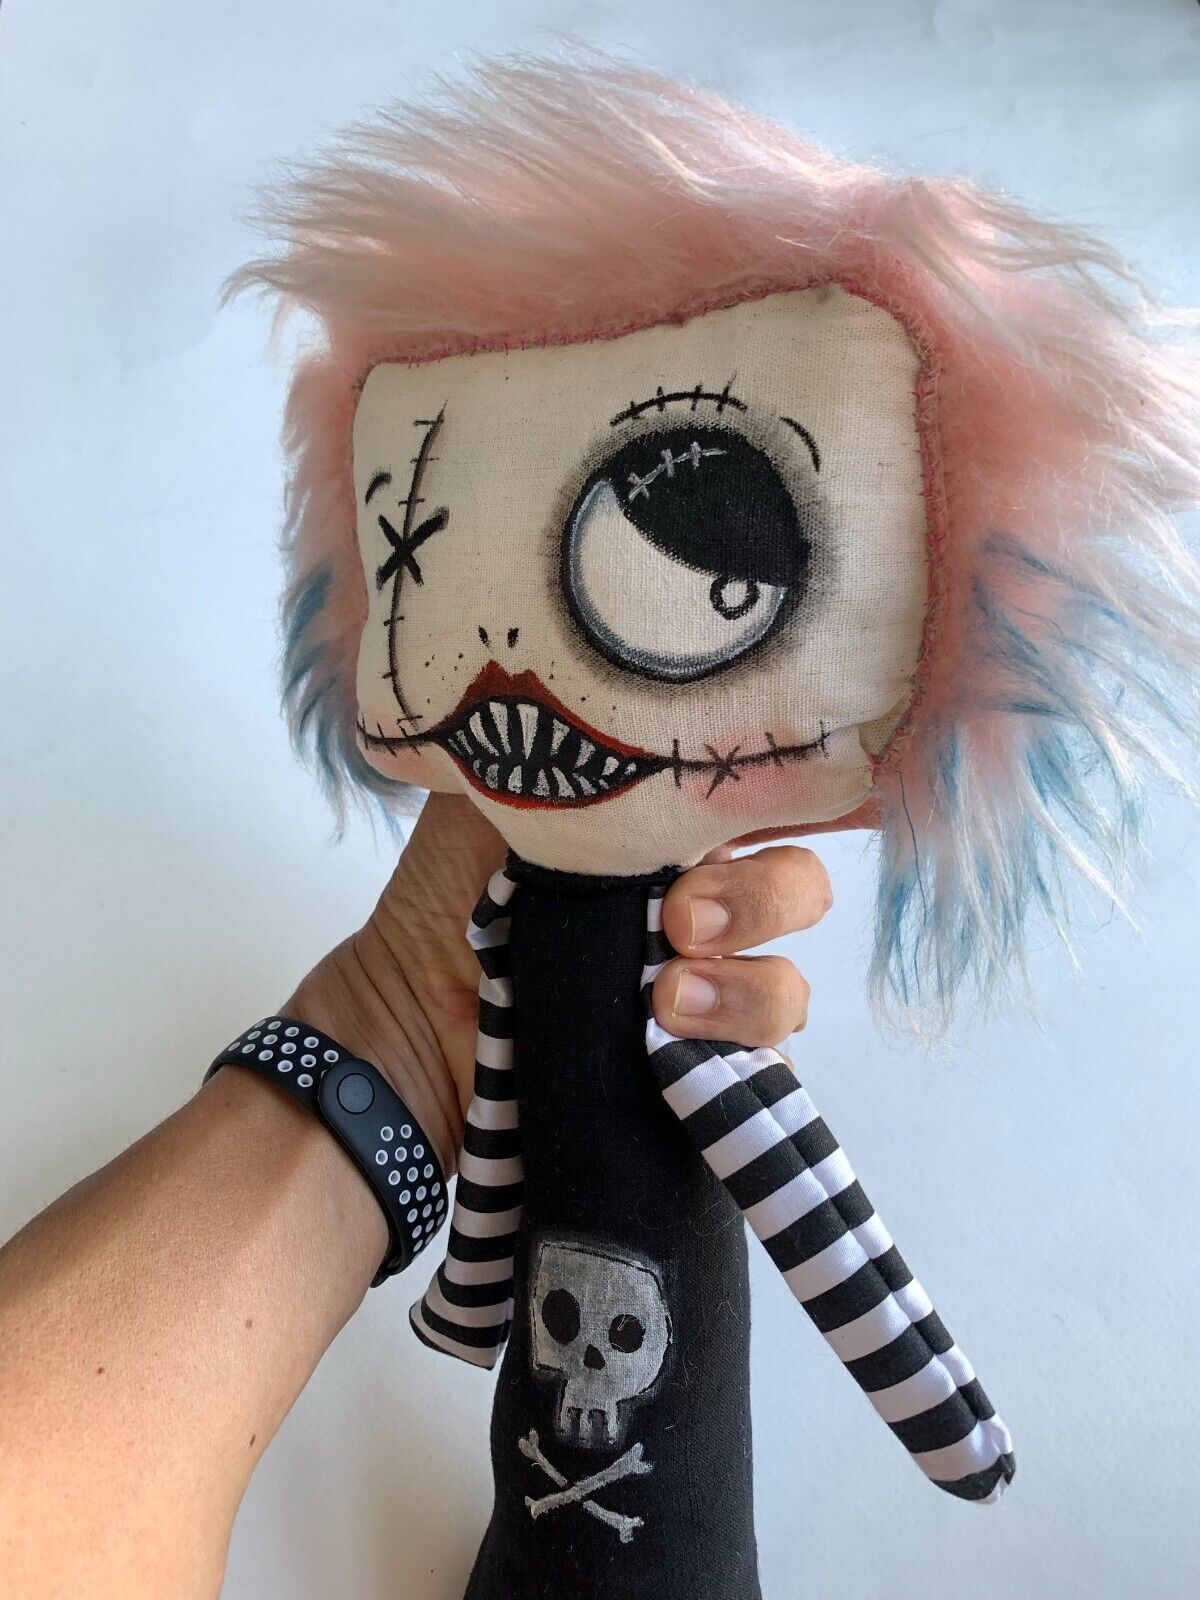 OOAK Doll Scary Handmade Strange Creepy Gothic Vampire Zombie Art